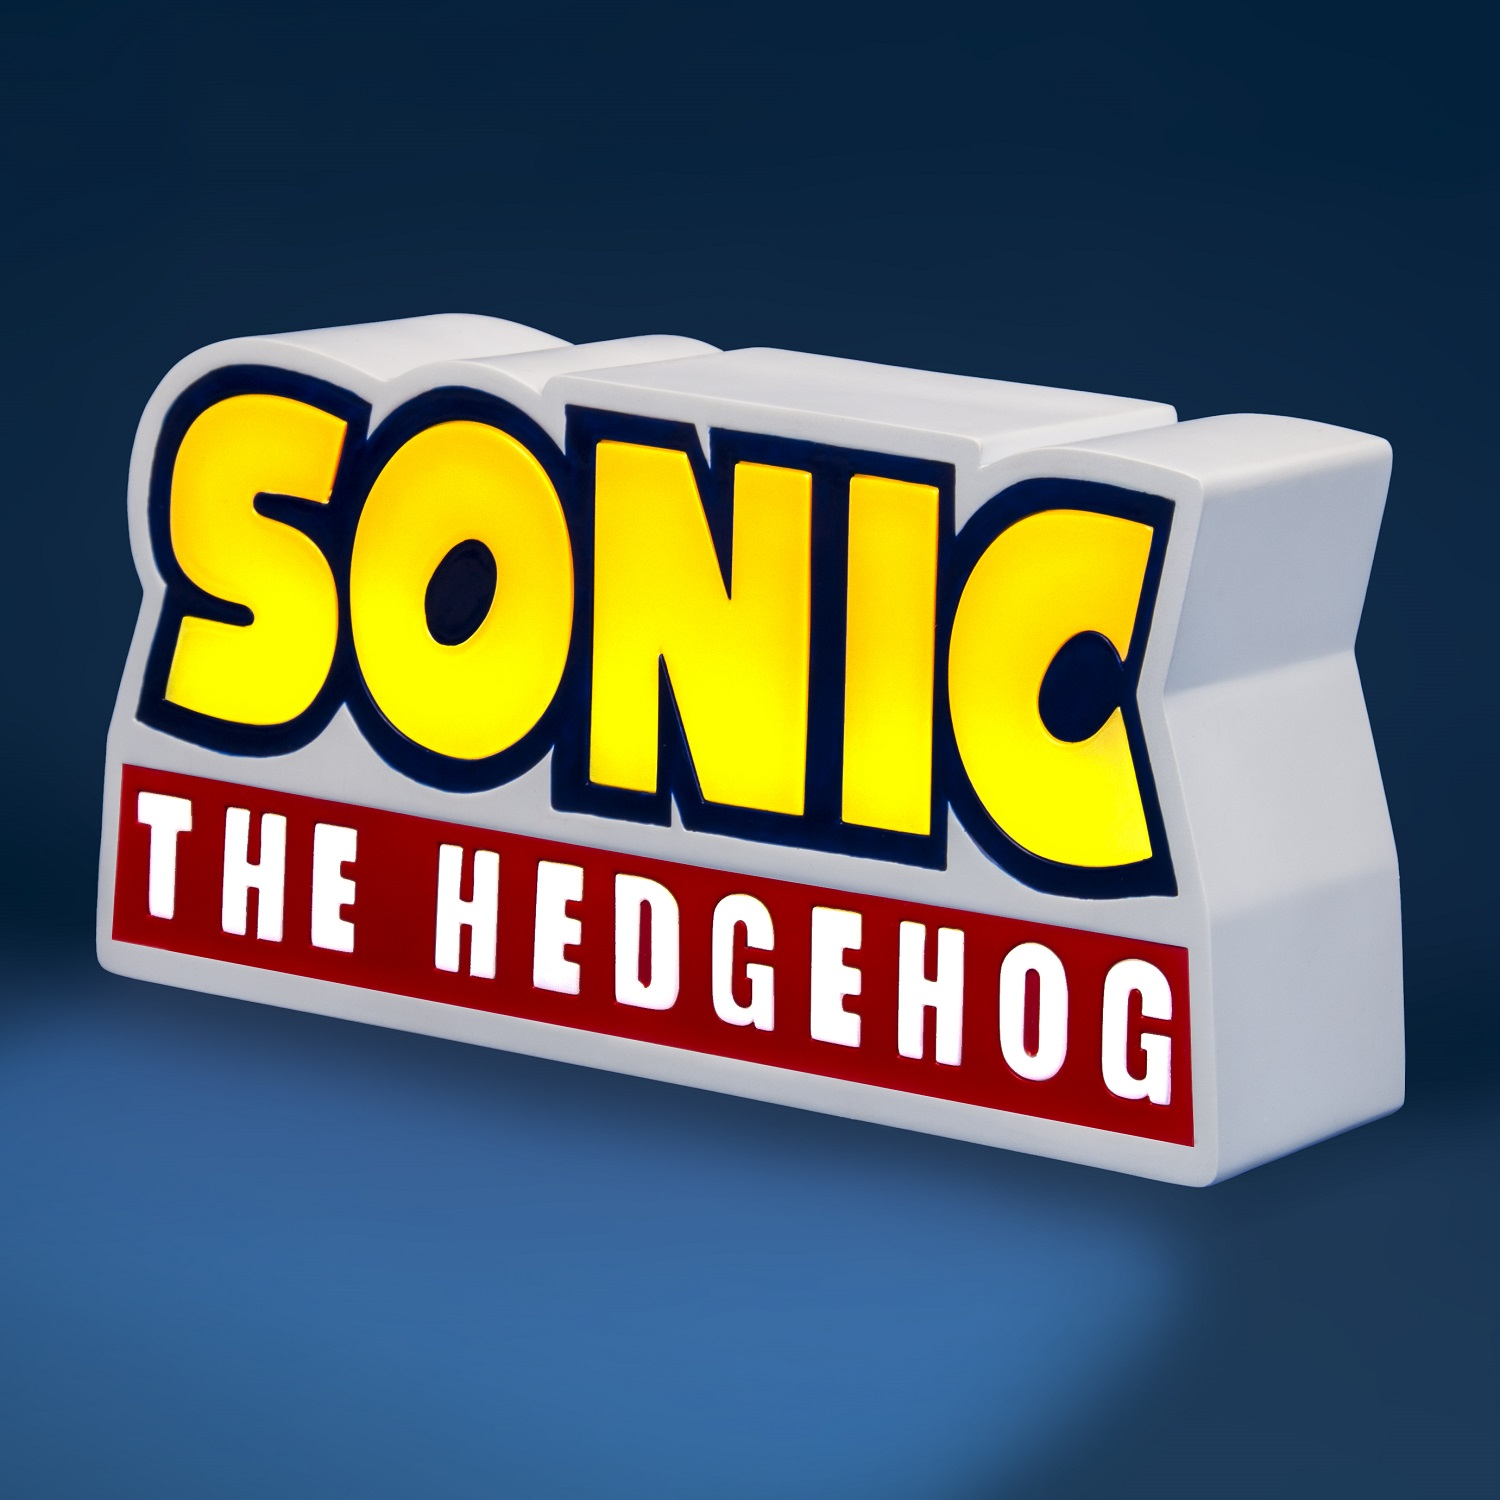 Hedgehog Sonic Logo The